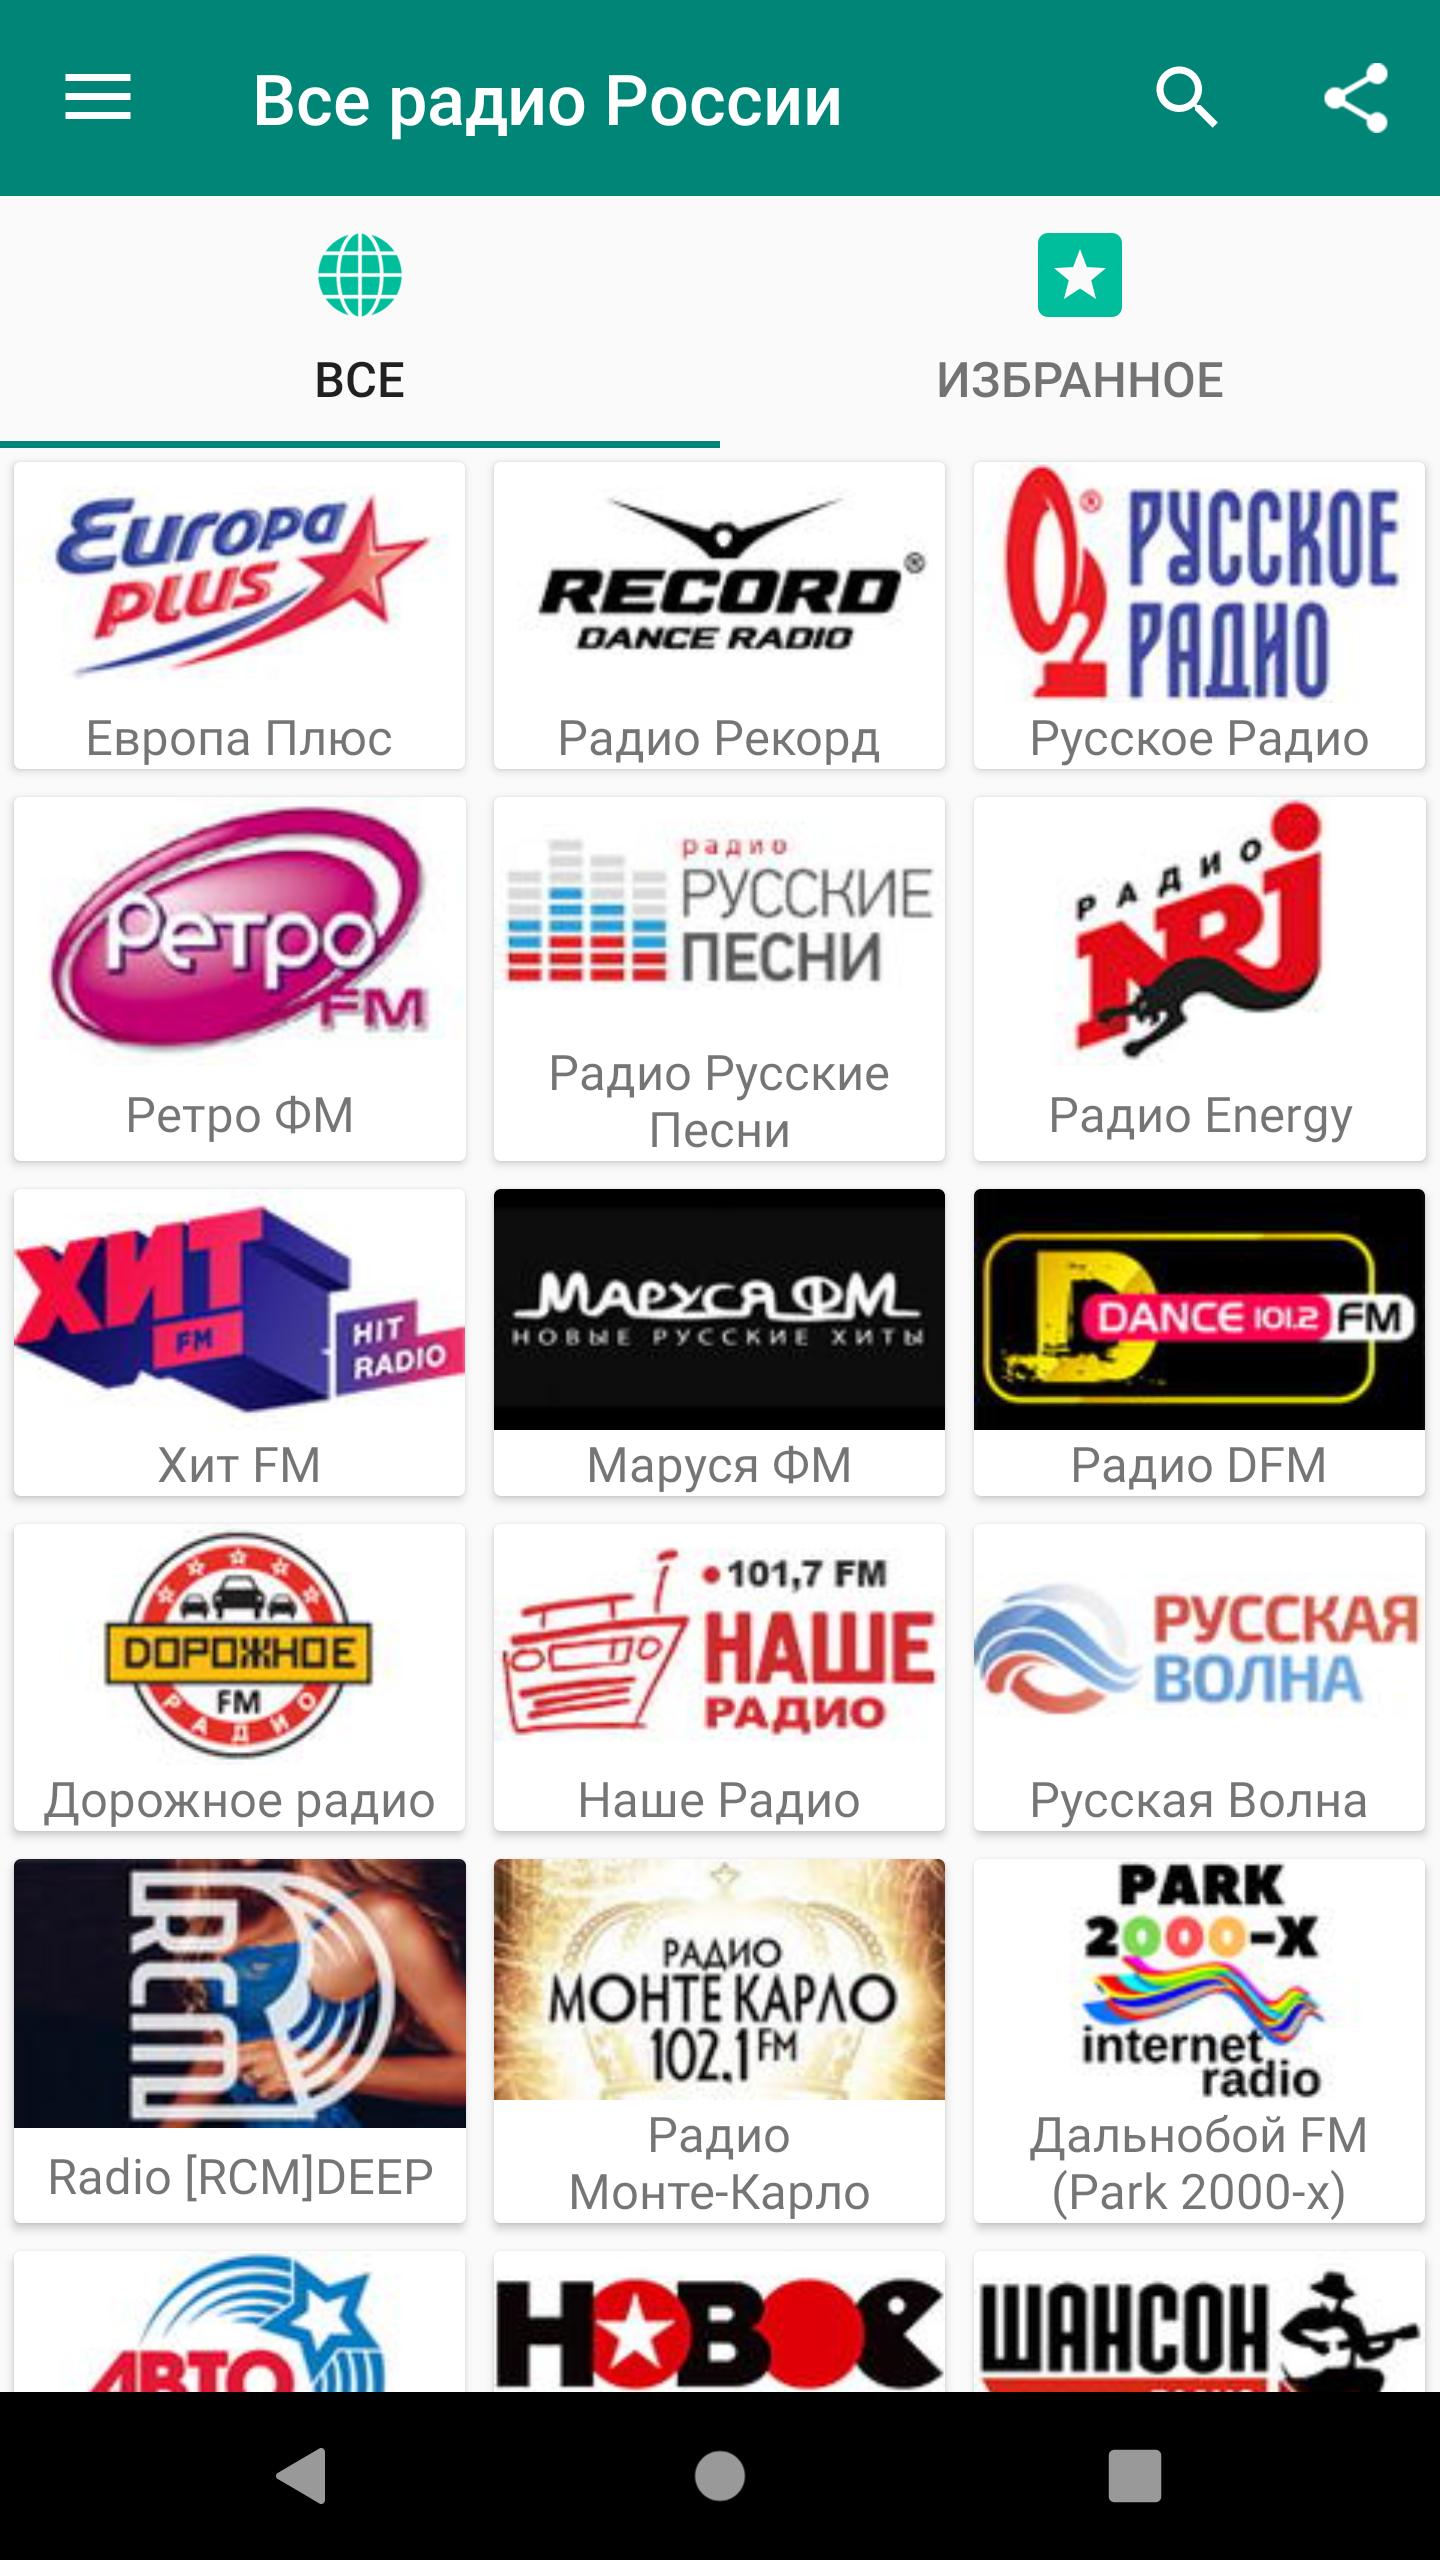 Назови радиостанции. Радиостанции России. Все российские радиостанции. Радио России. Название всех радиостанций.